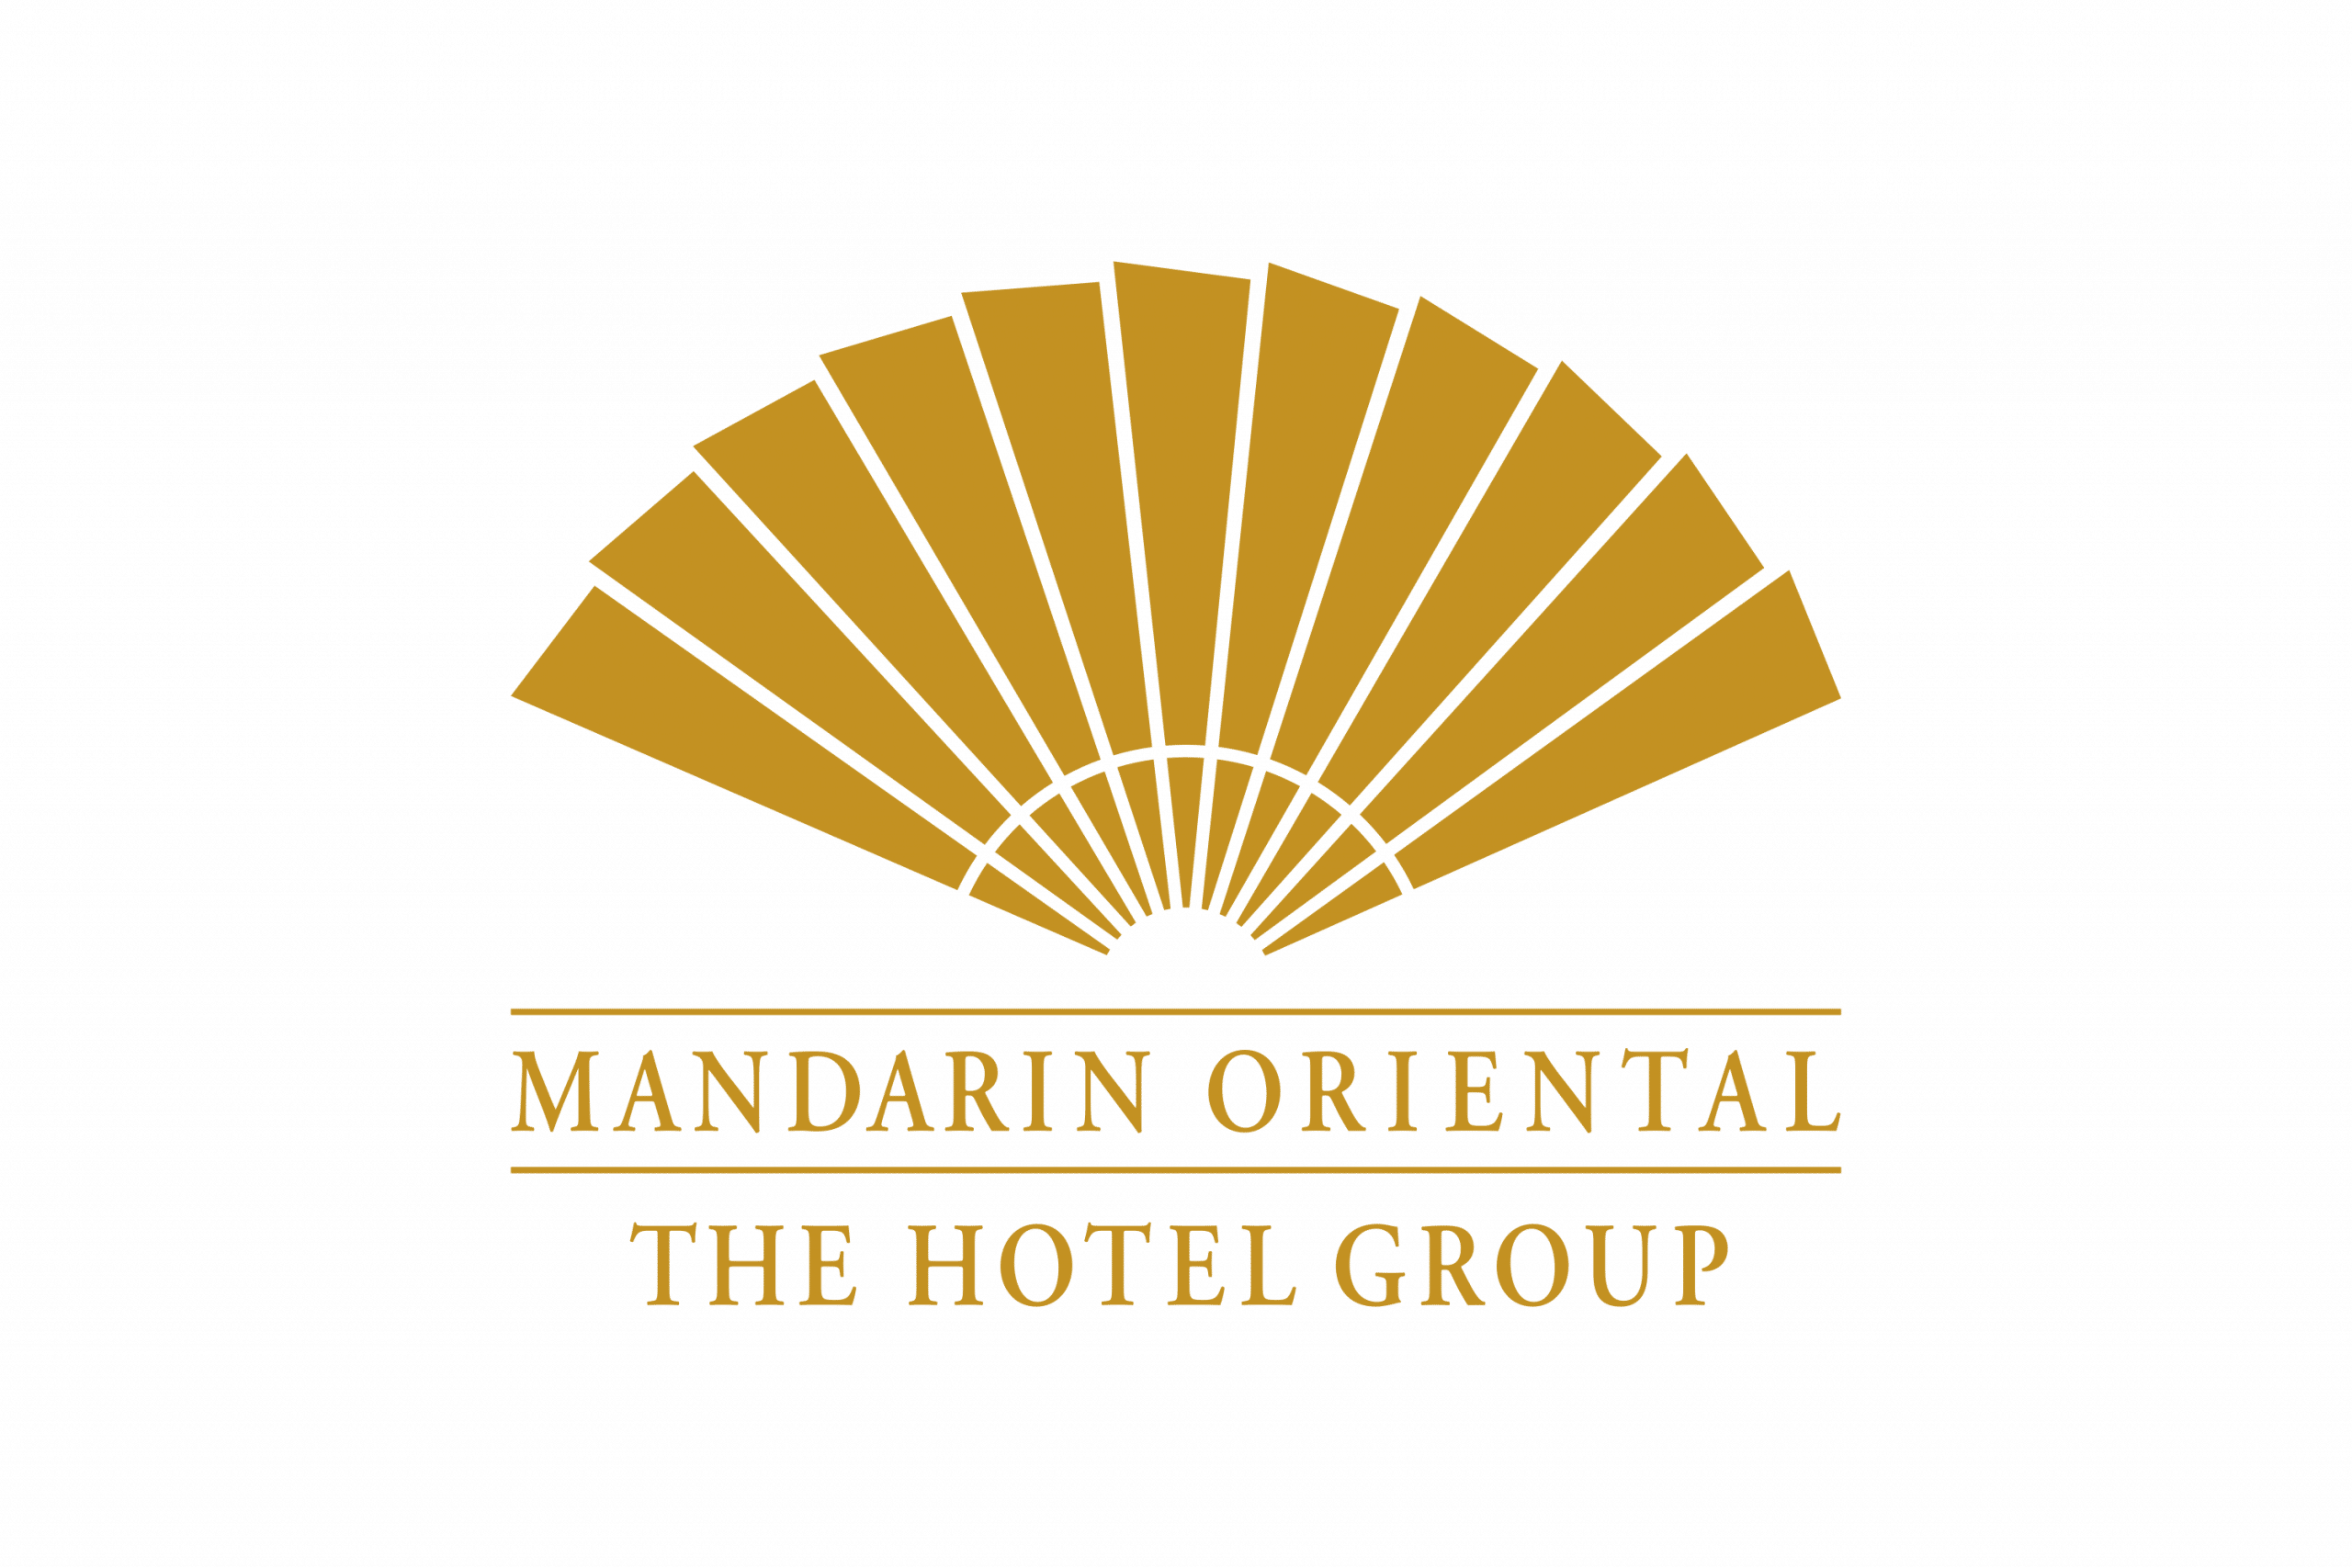 Mandarin_Oriental_Hotel_Group-Logo.wine